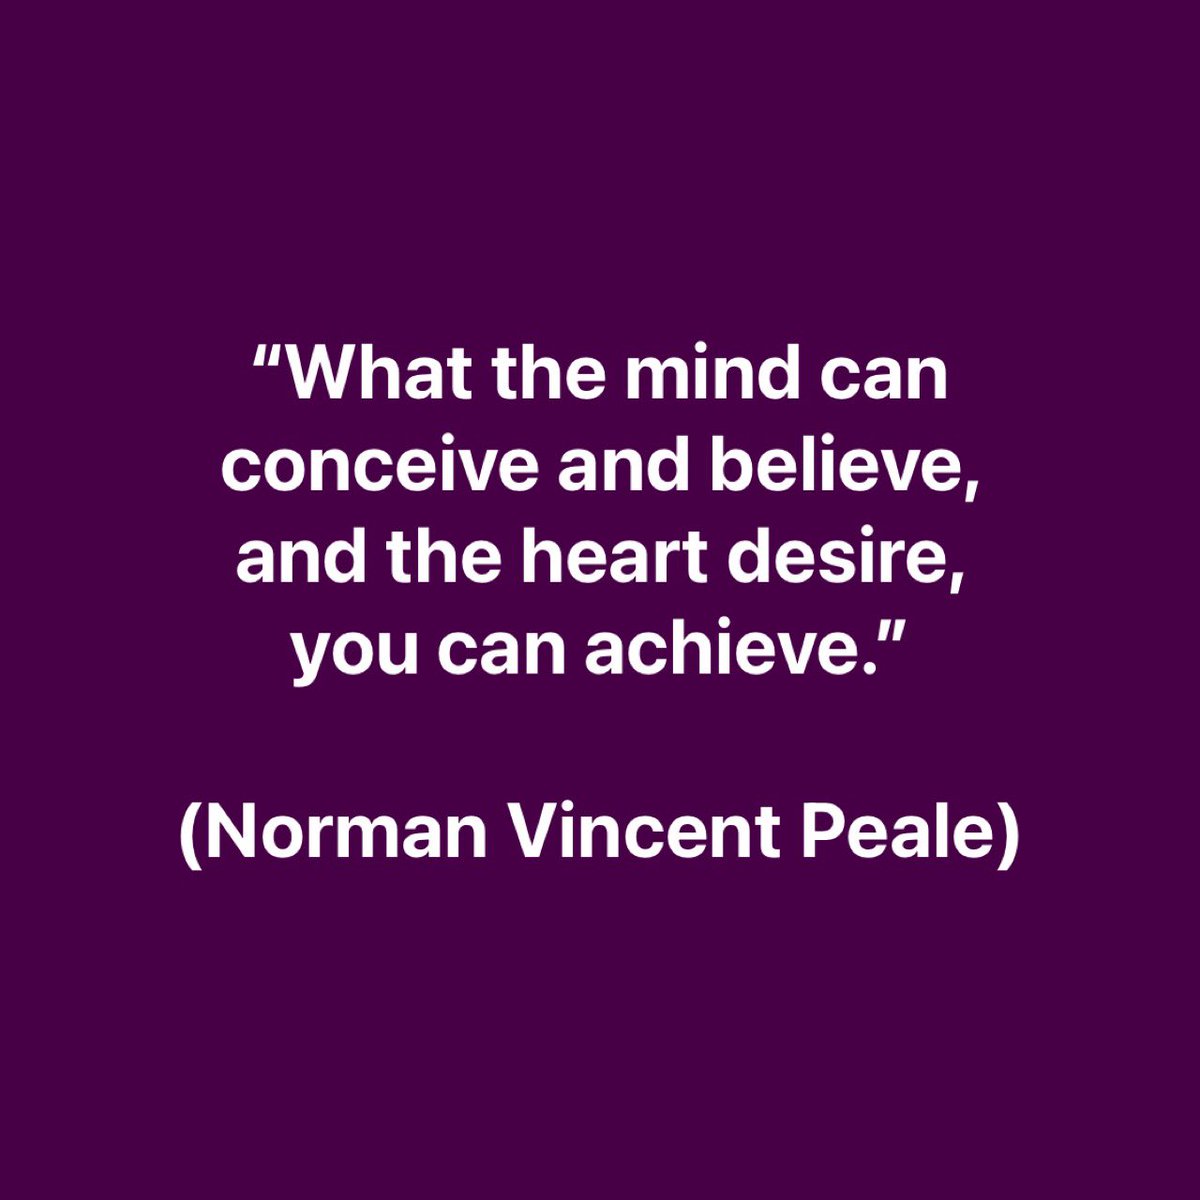 #NormanVincentPeale #Mind #Conceive #Believe #Heart #Desire #Achieve #PositiveThinking #改善 #Mejora #Kaizen #Improvement